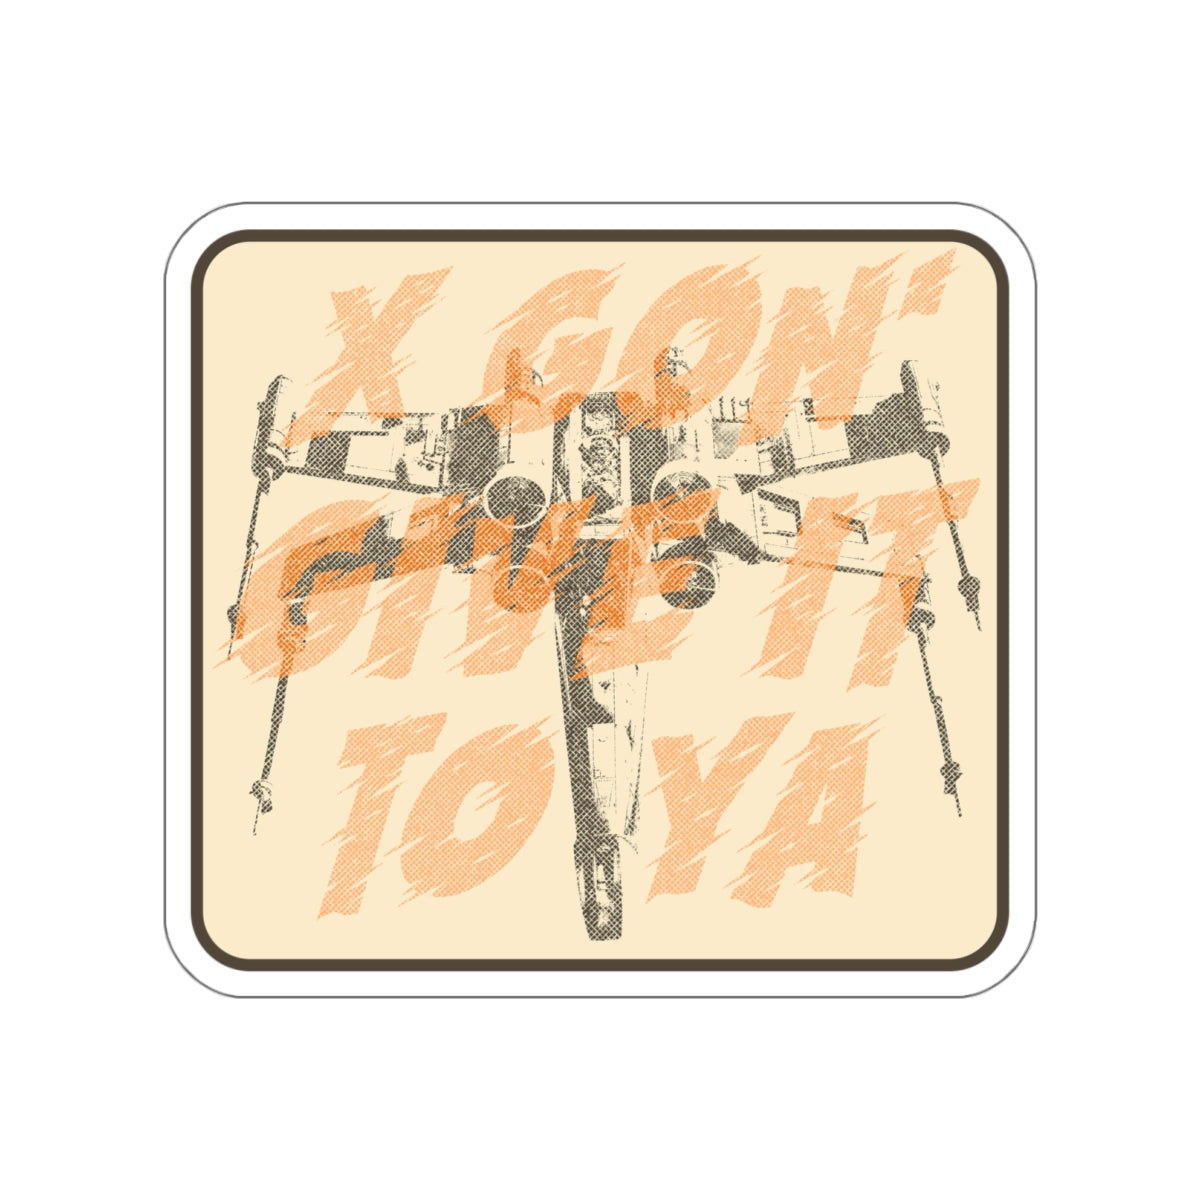 X-Wing Gon' Give It To Ya vinyl sticker